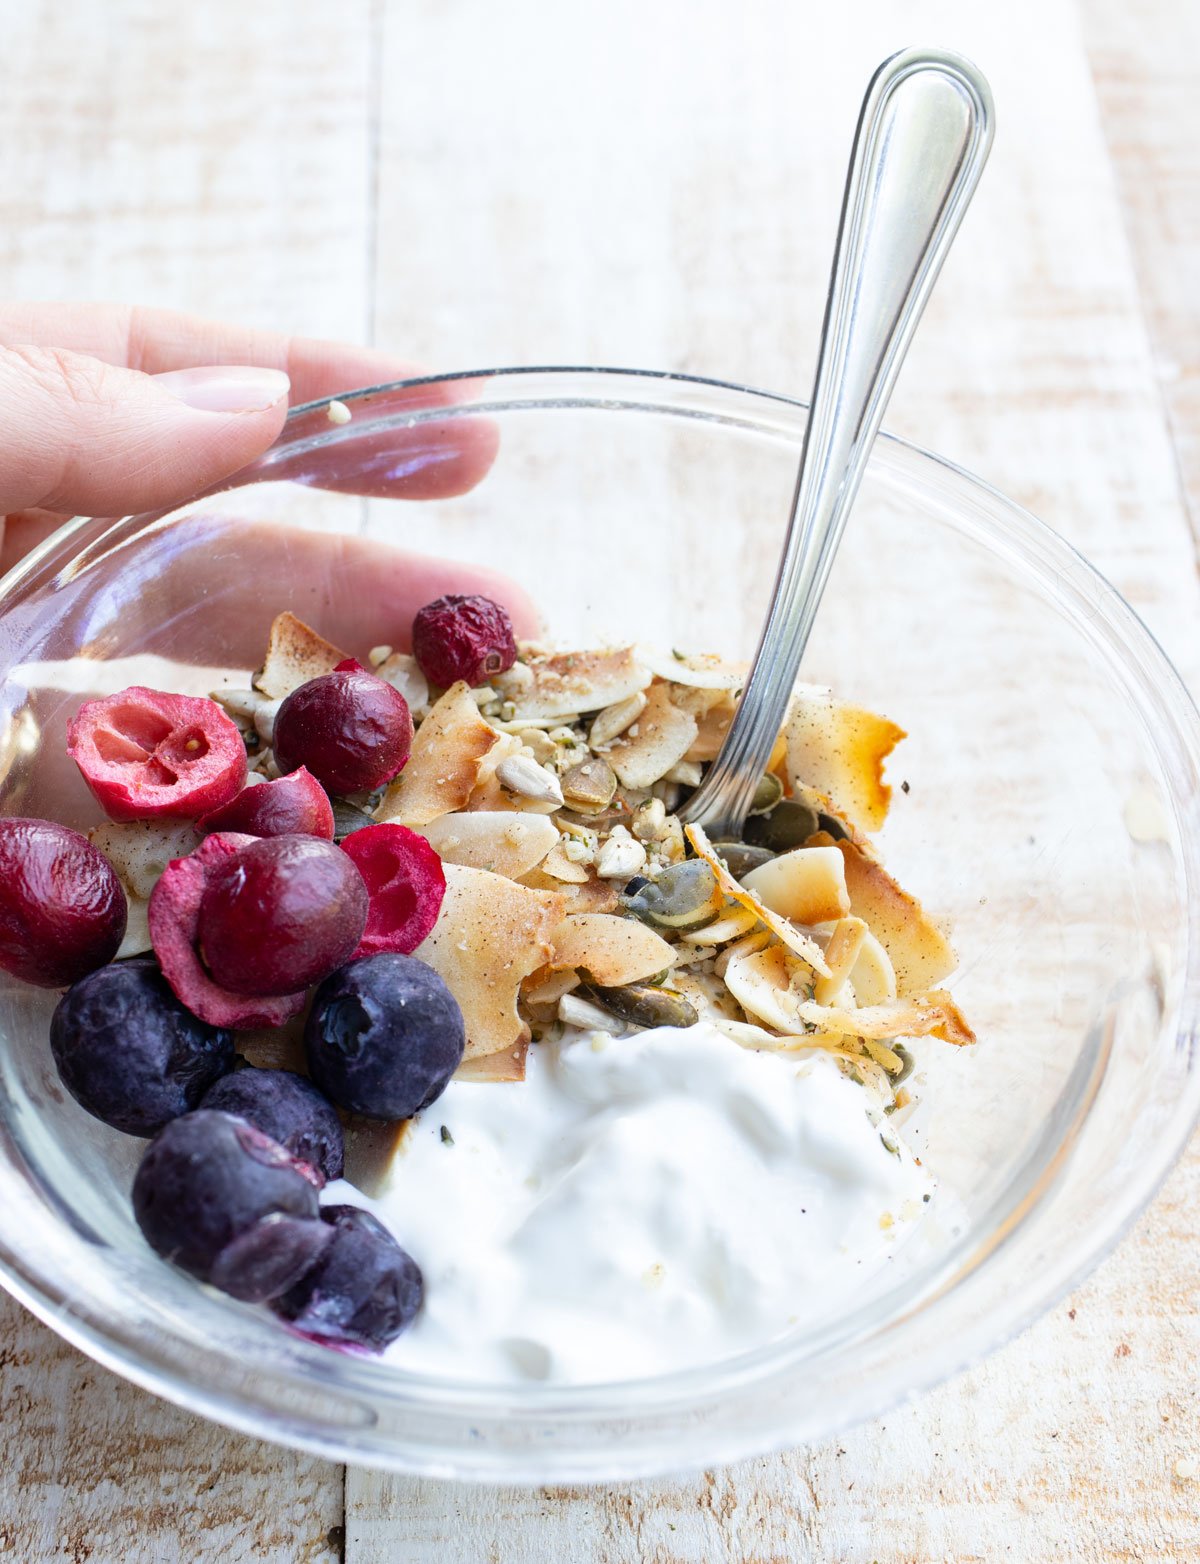 Muesli in a bowl with yogurt and berries.